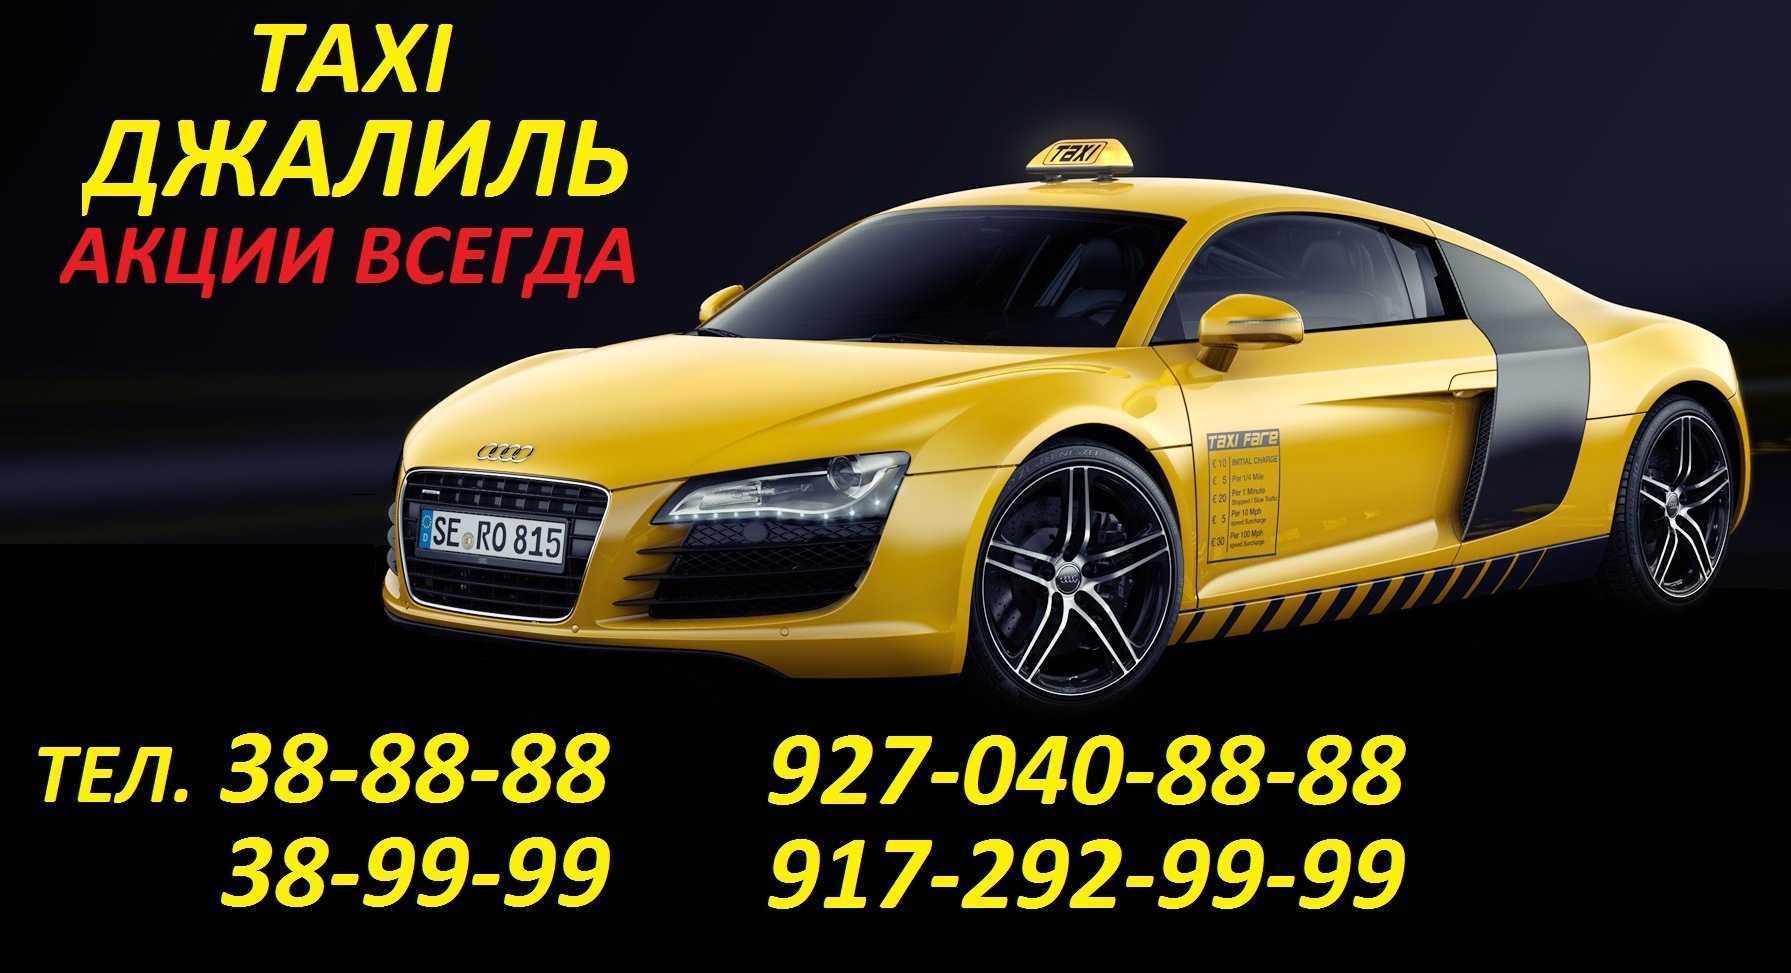 Номер такси города казани. Такси Джалиль. Такси Джалиль номера. Номера такси в Джалиле. Такси в Джалиле.